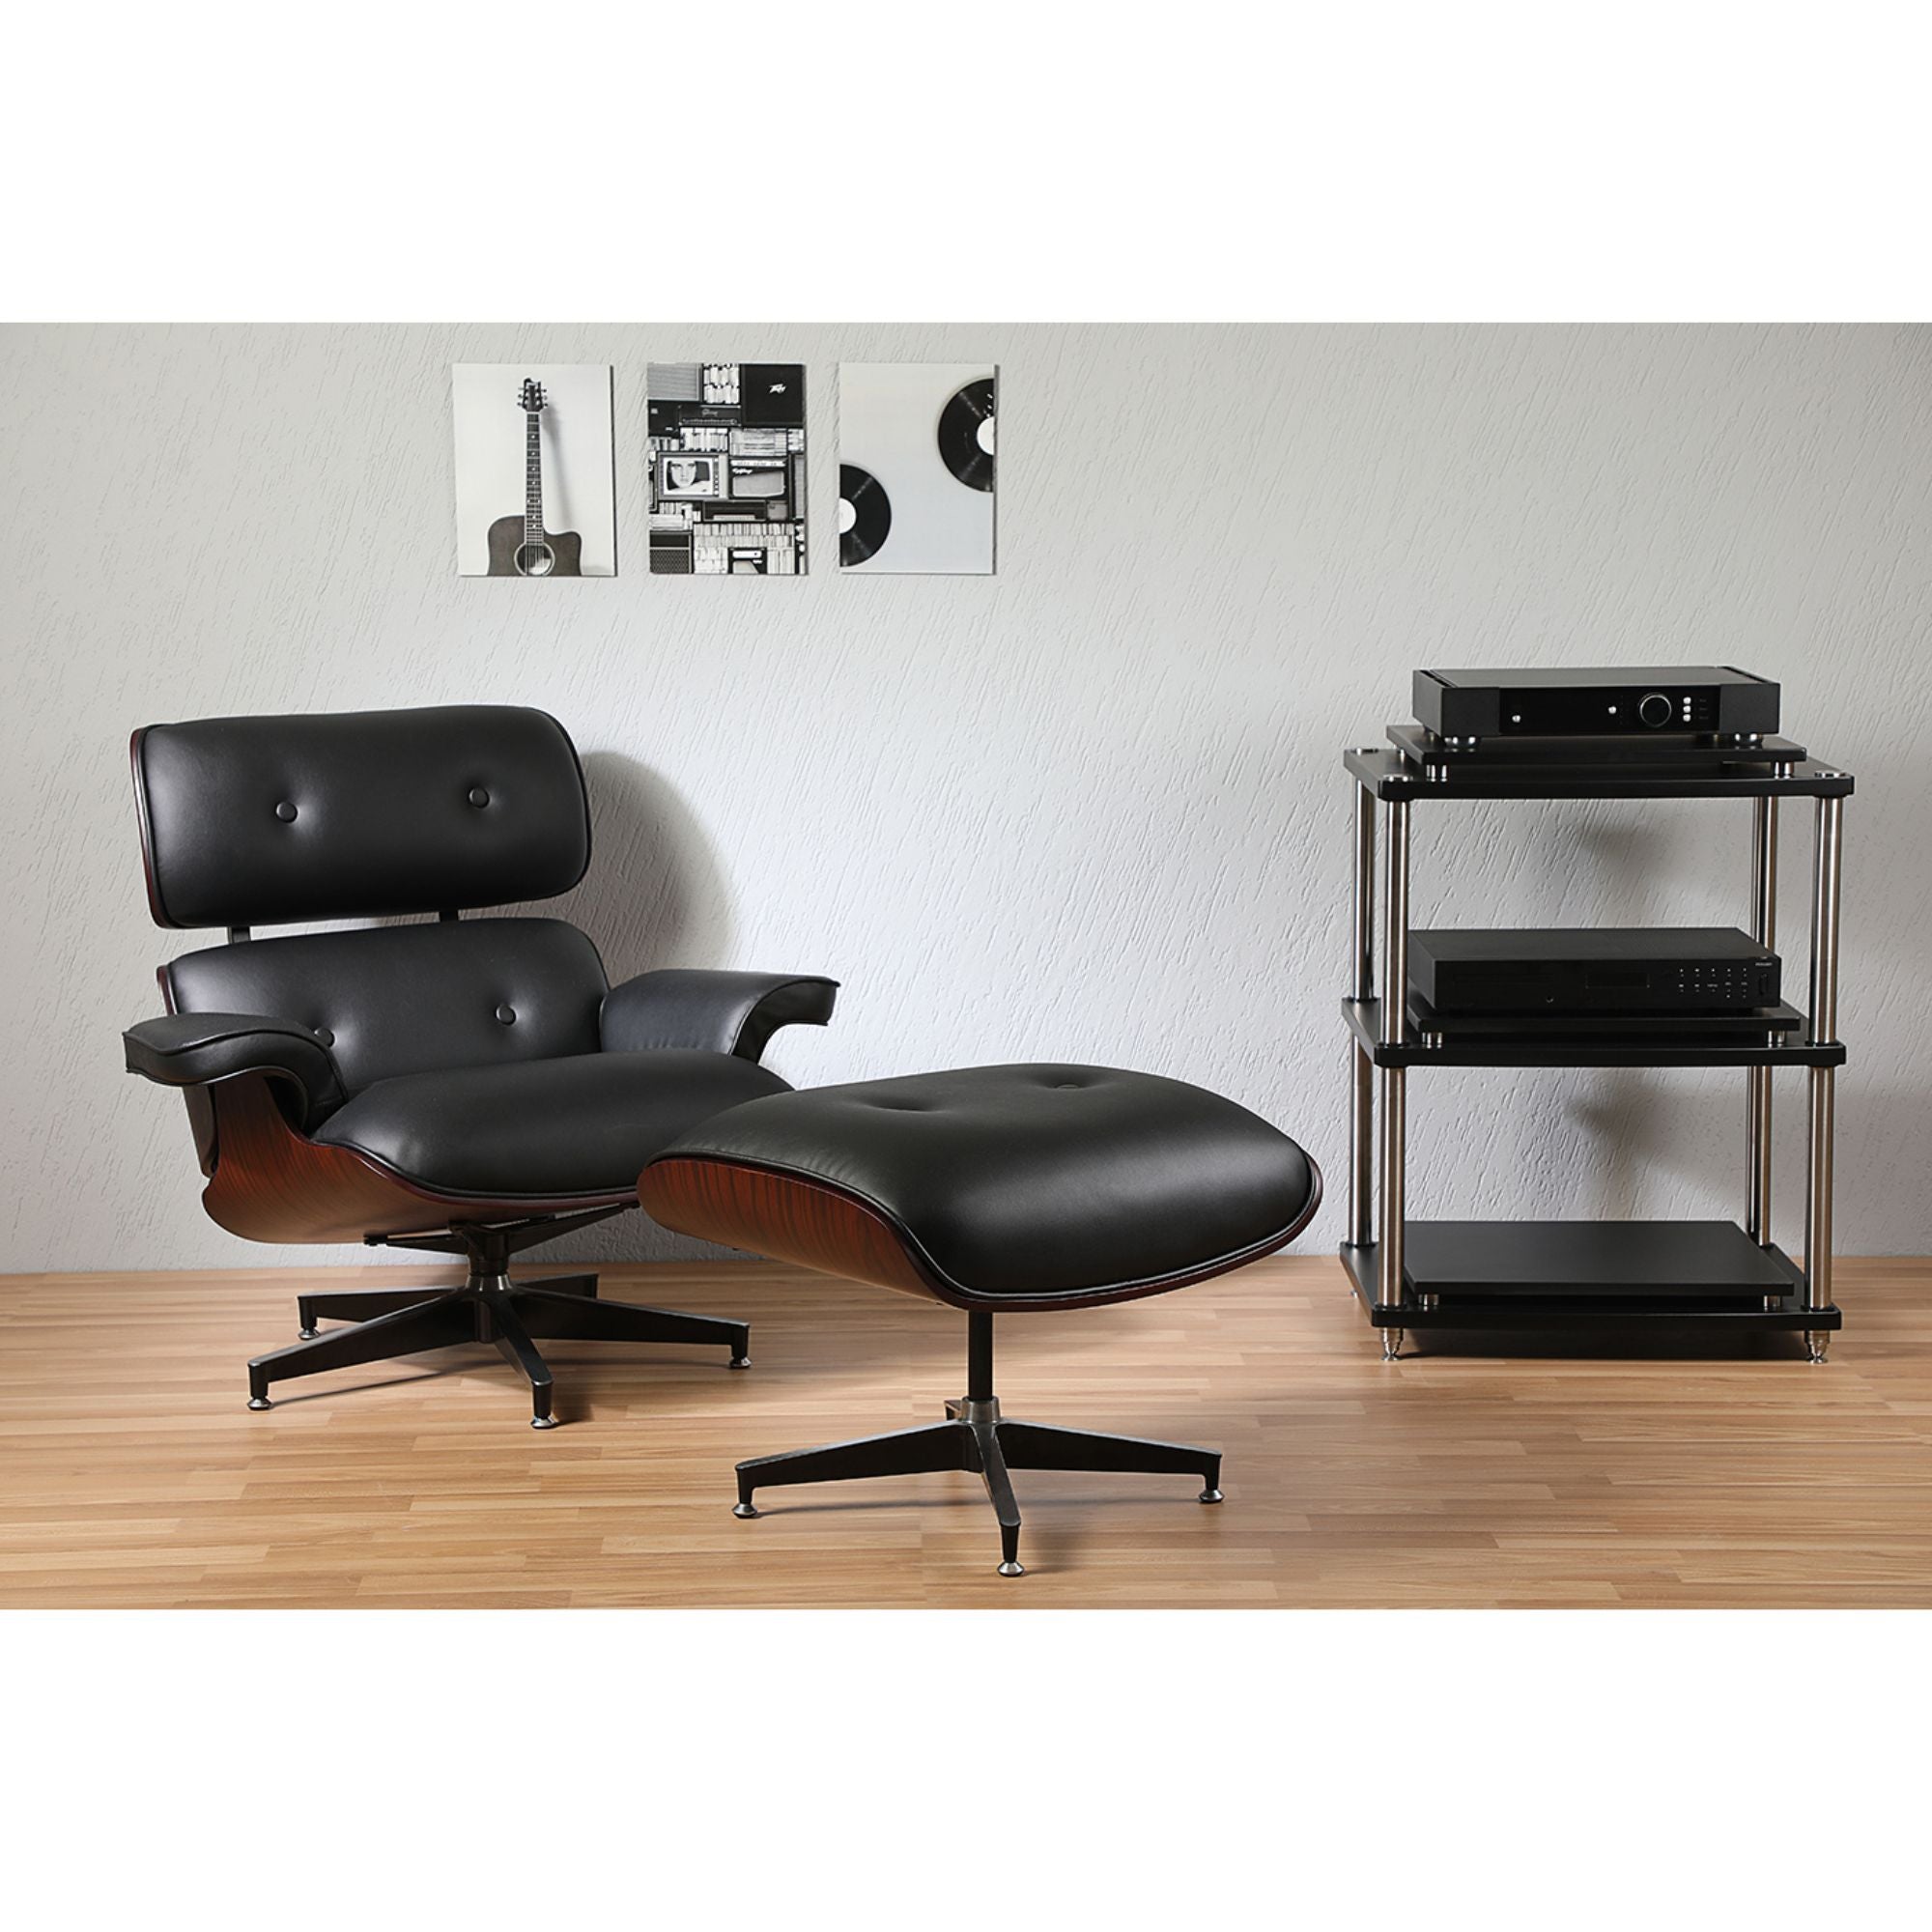 Esthetica Jordan Lounge Chair, Esthetica, Chair - AVStore.in